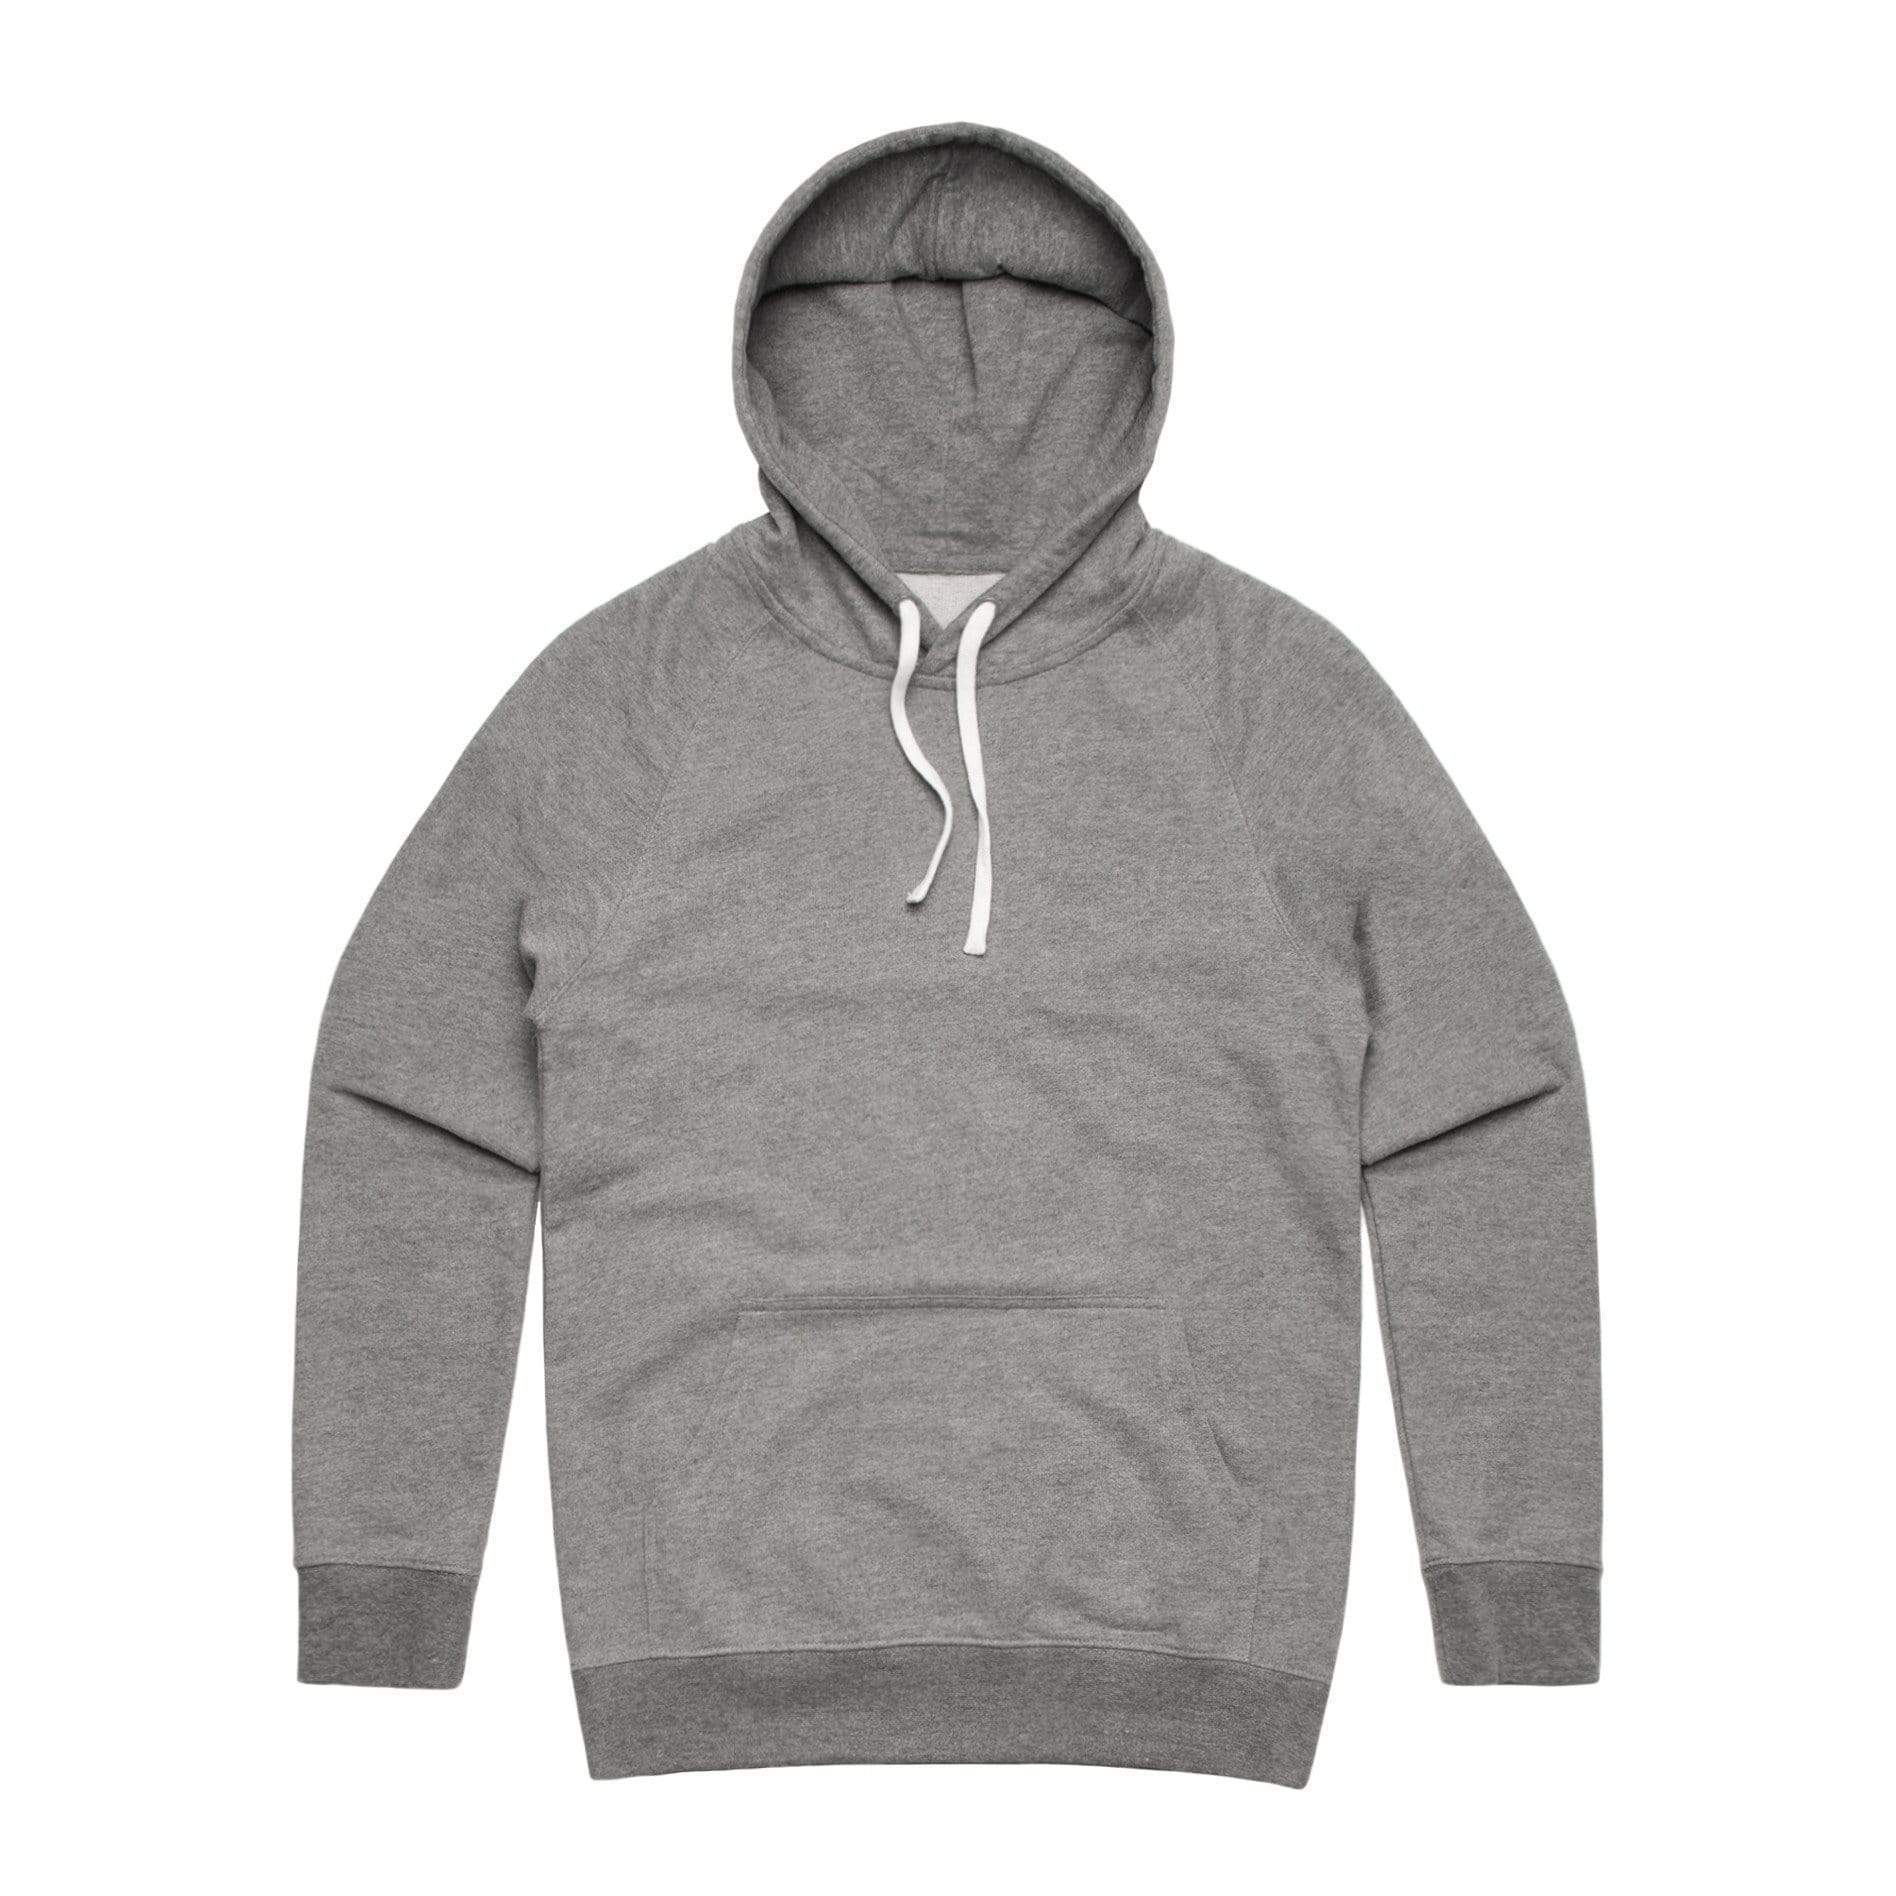 As Colour Casual Wear STEEL MARLE / XSM As Colour Men's vector hoodie 5108